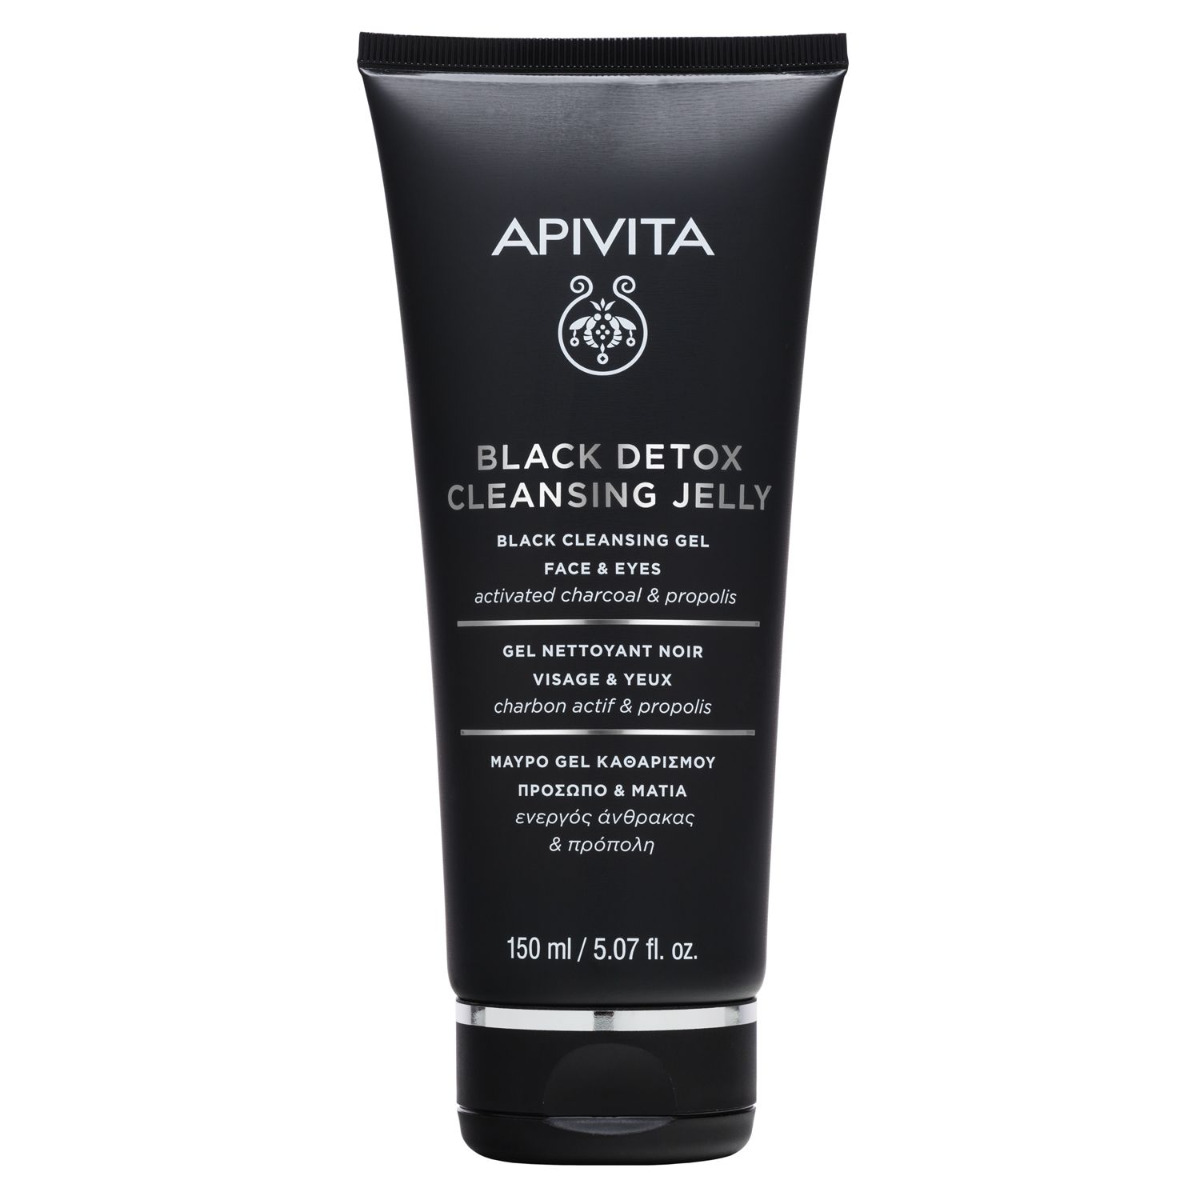 APIVITA Black Detox Cleansing Jelly černý čisticí gel 150 ml APIVITA